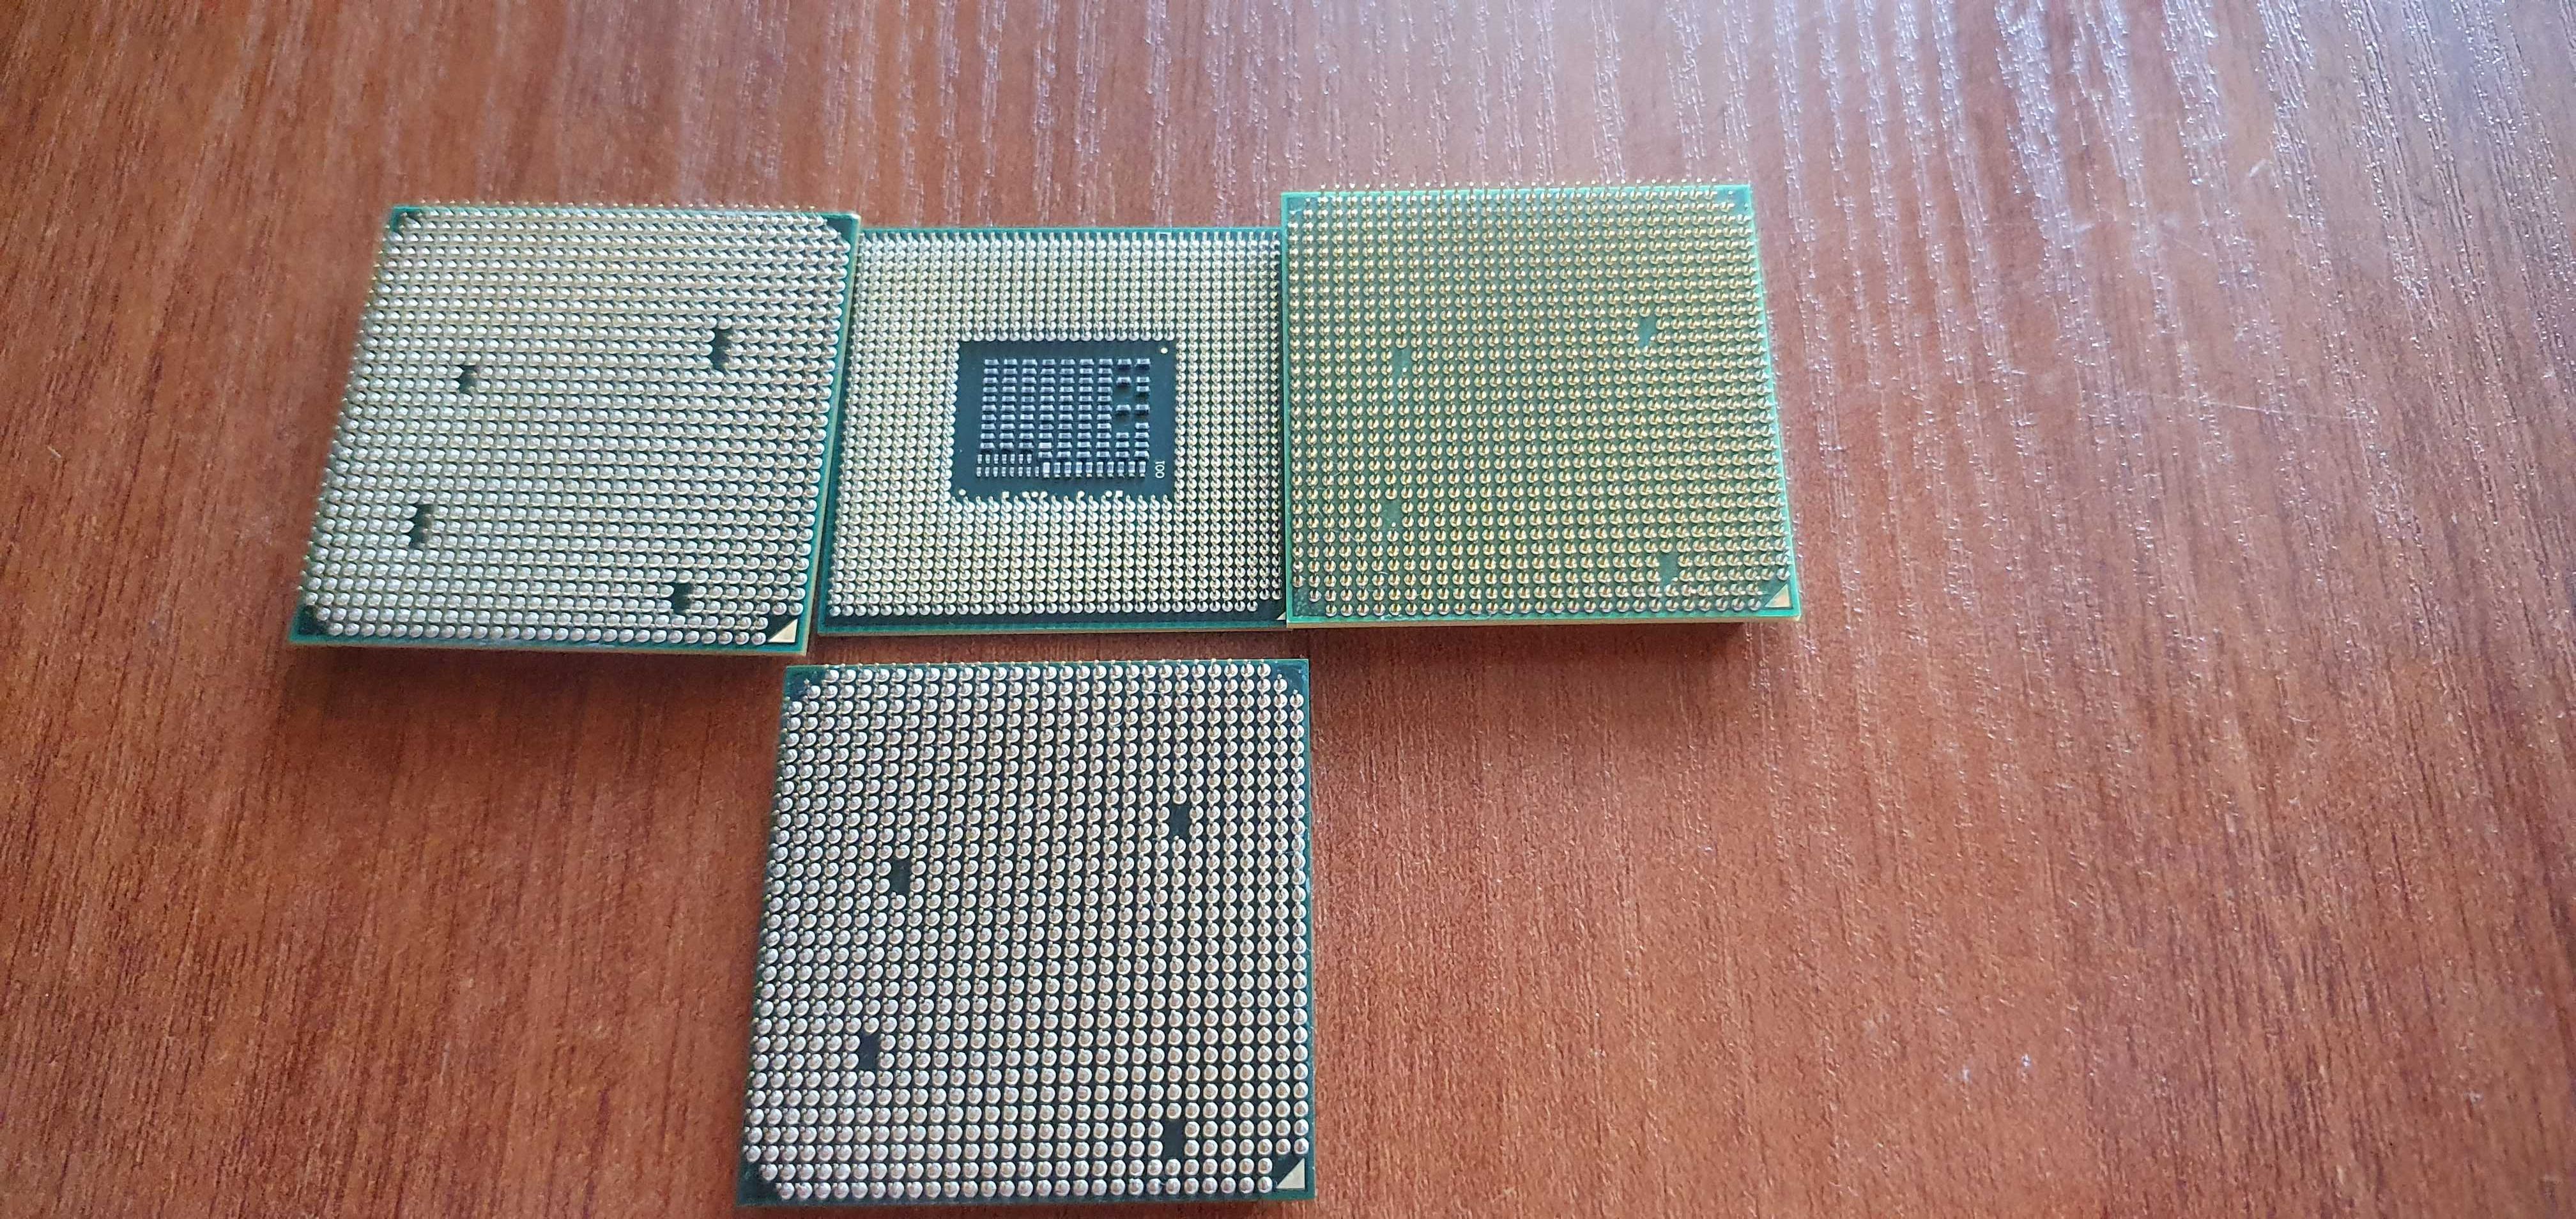 Процессоры AMD FX,Athlon 64 X2,Athlon X2